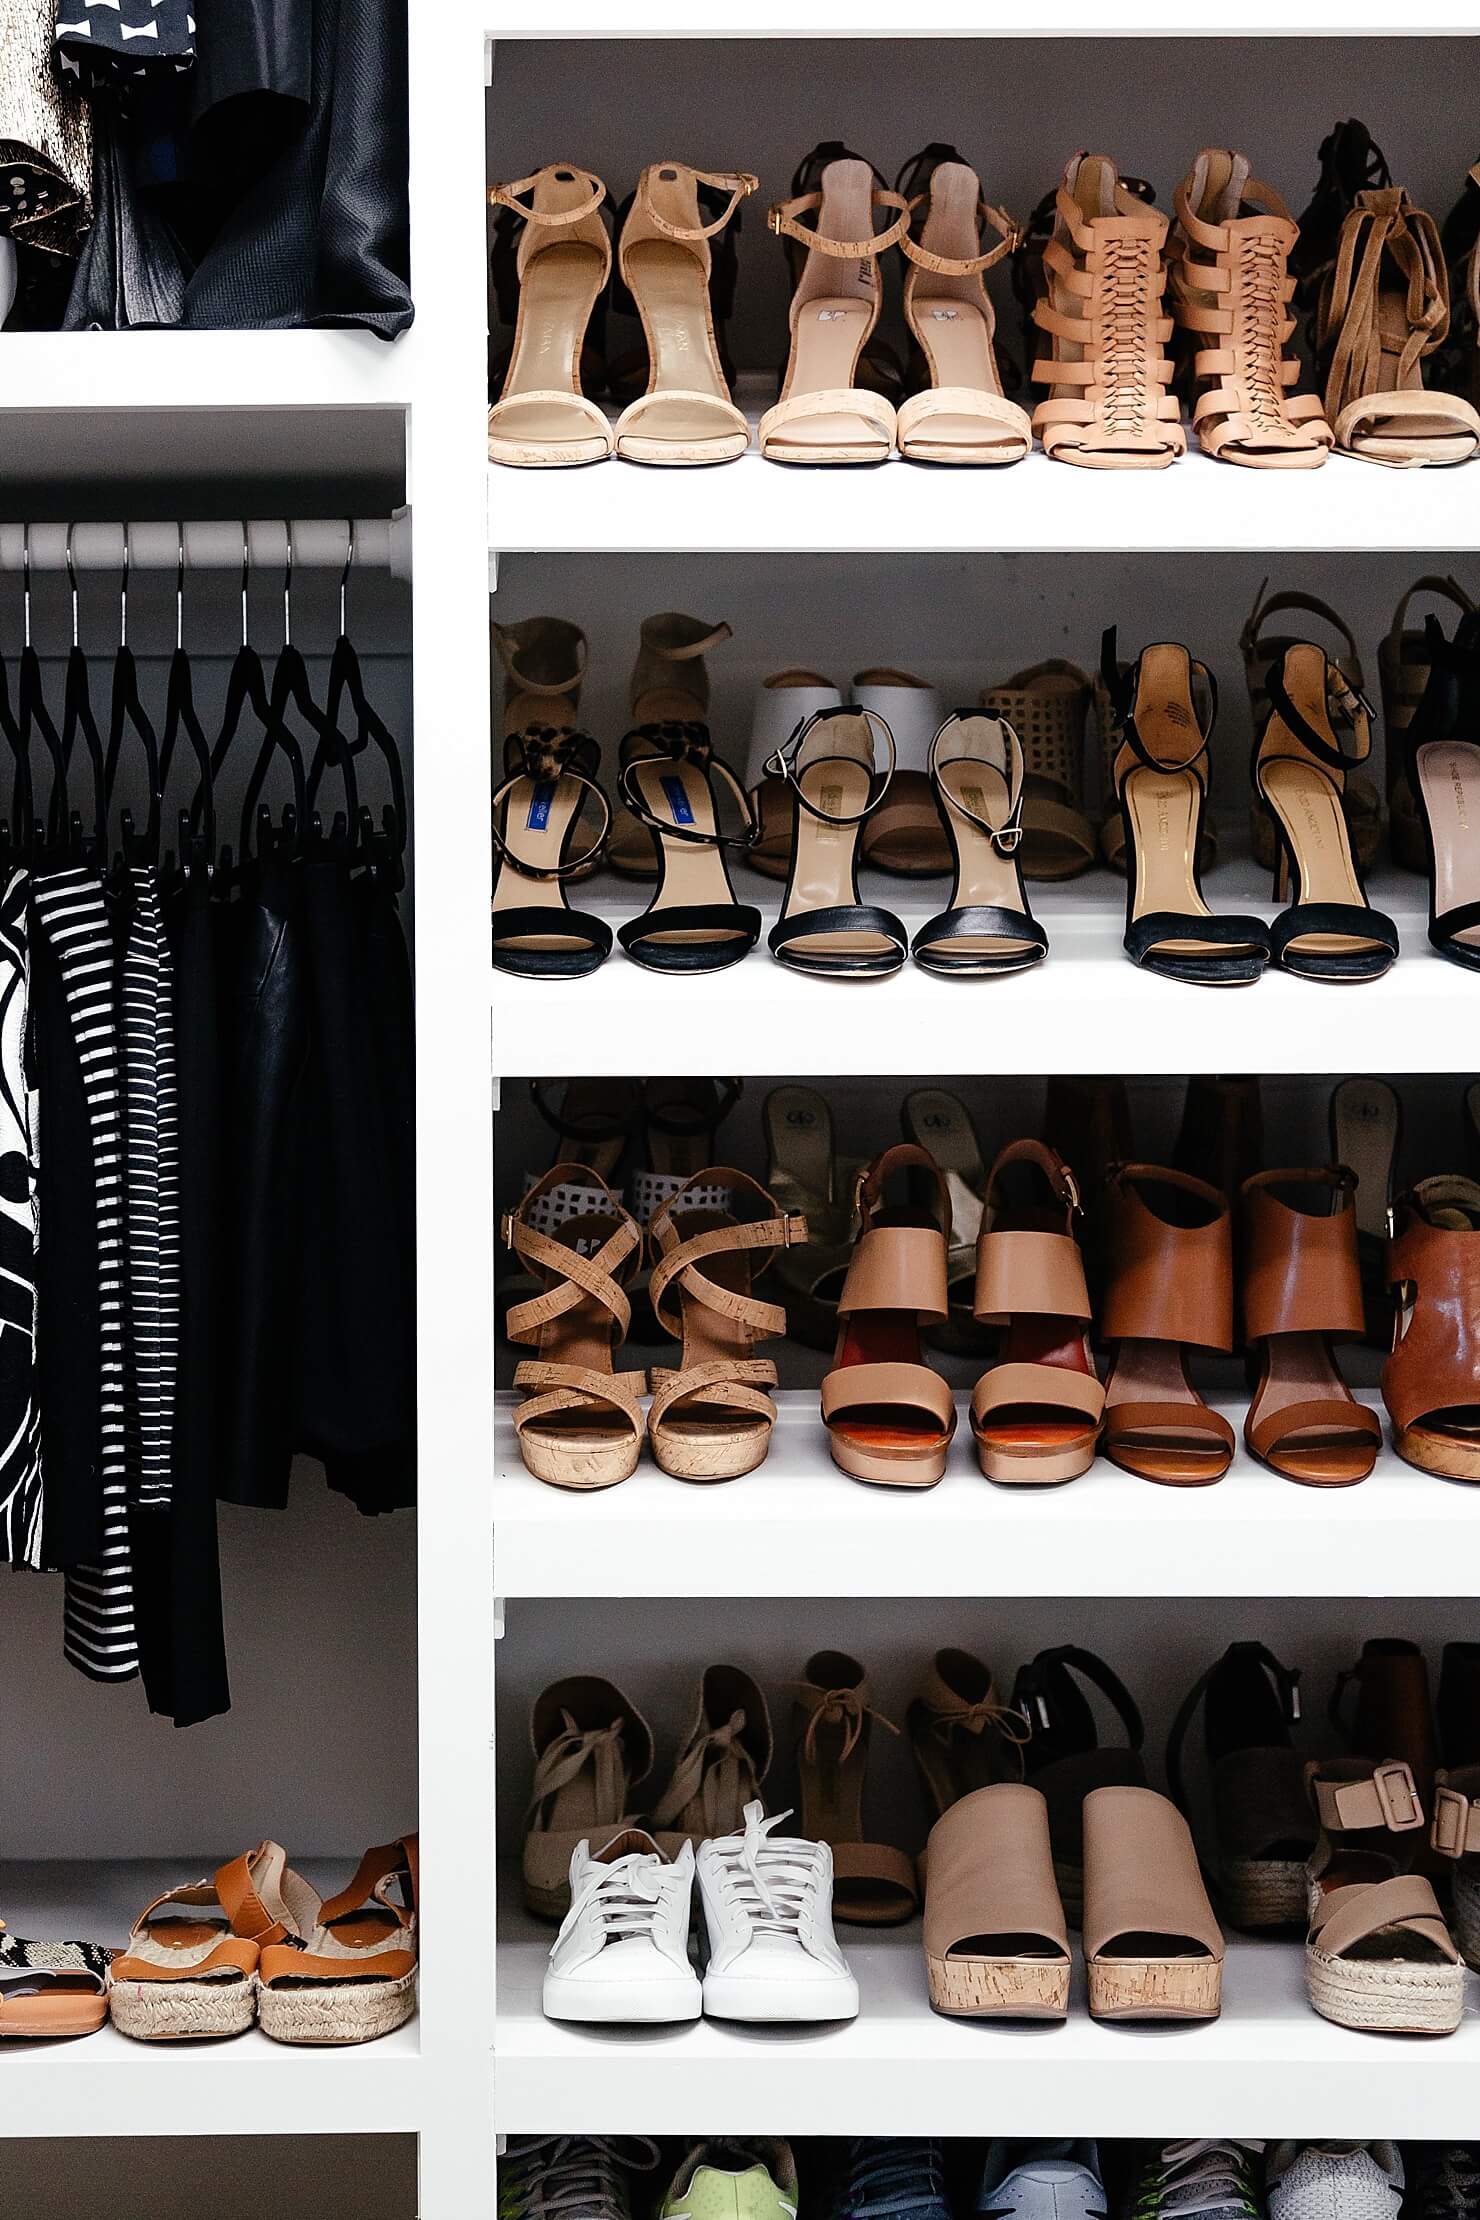 brighton keller new home closet reveal shoe organization